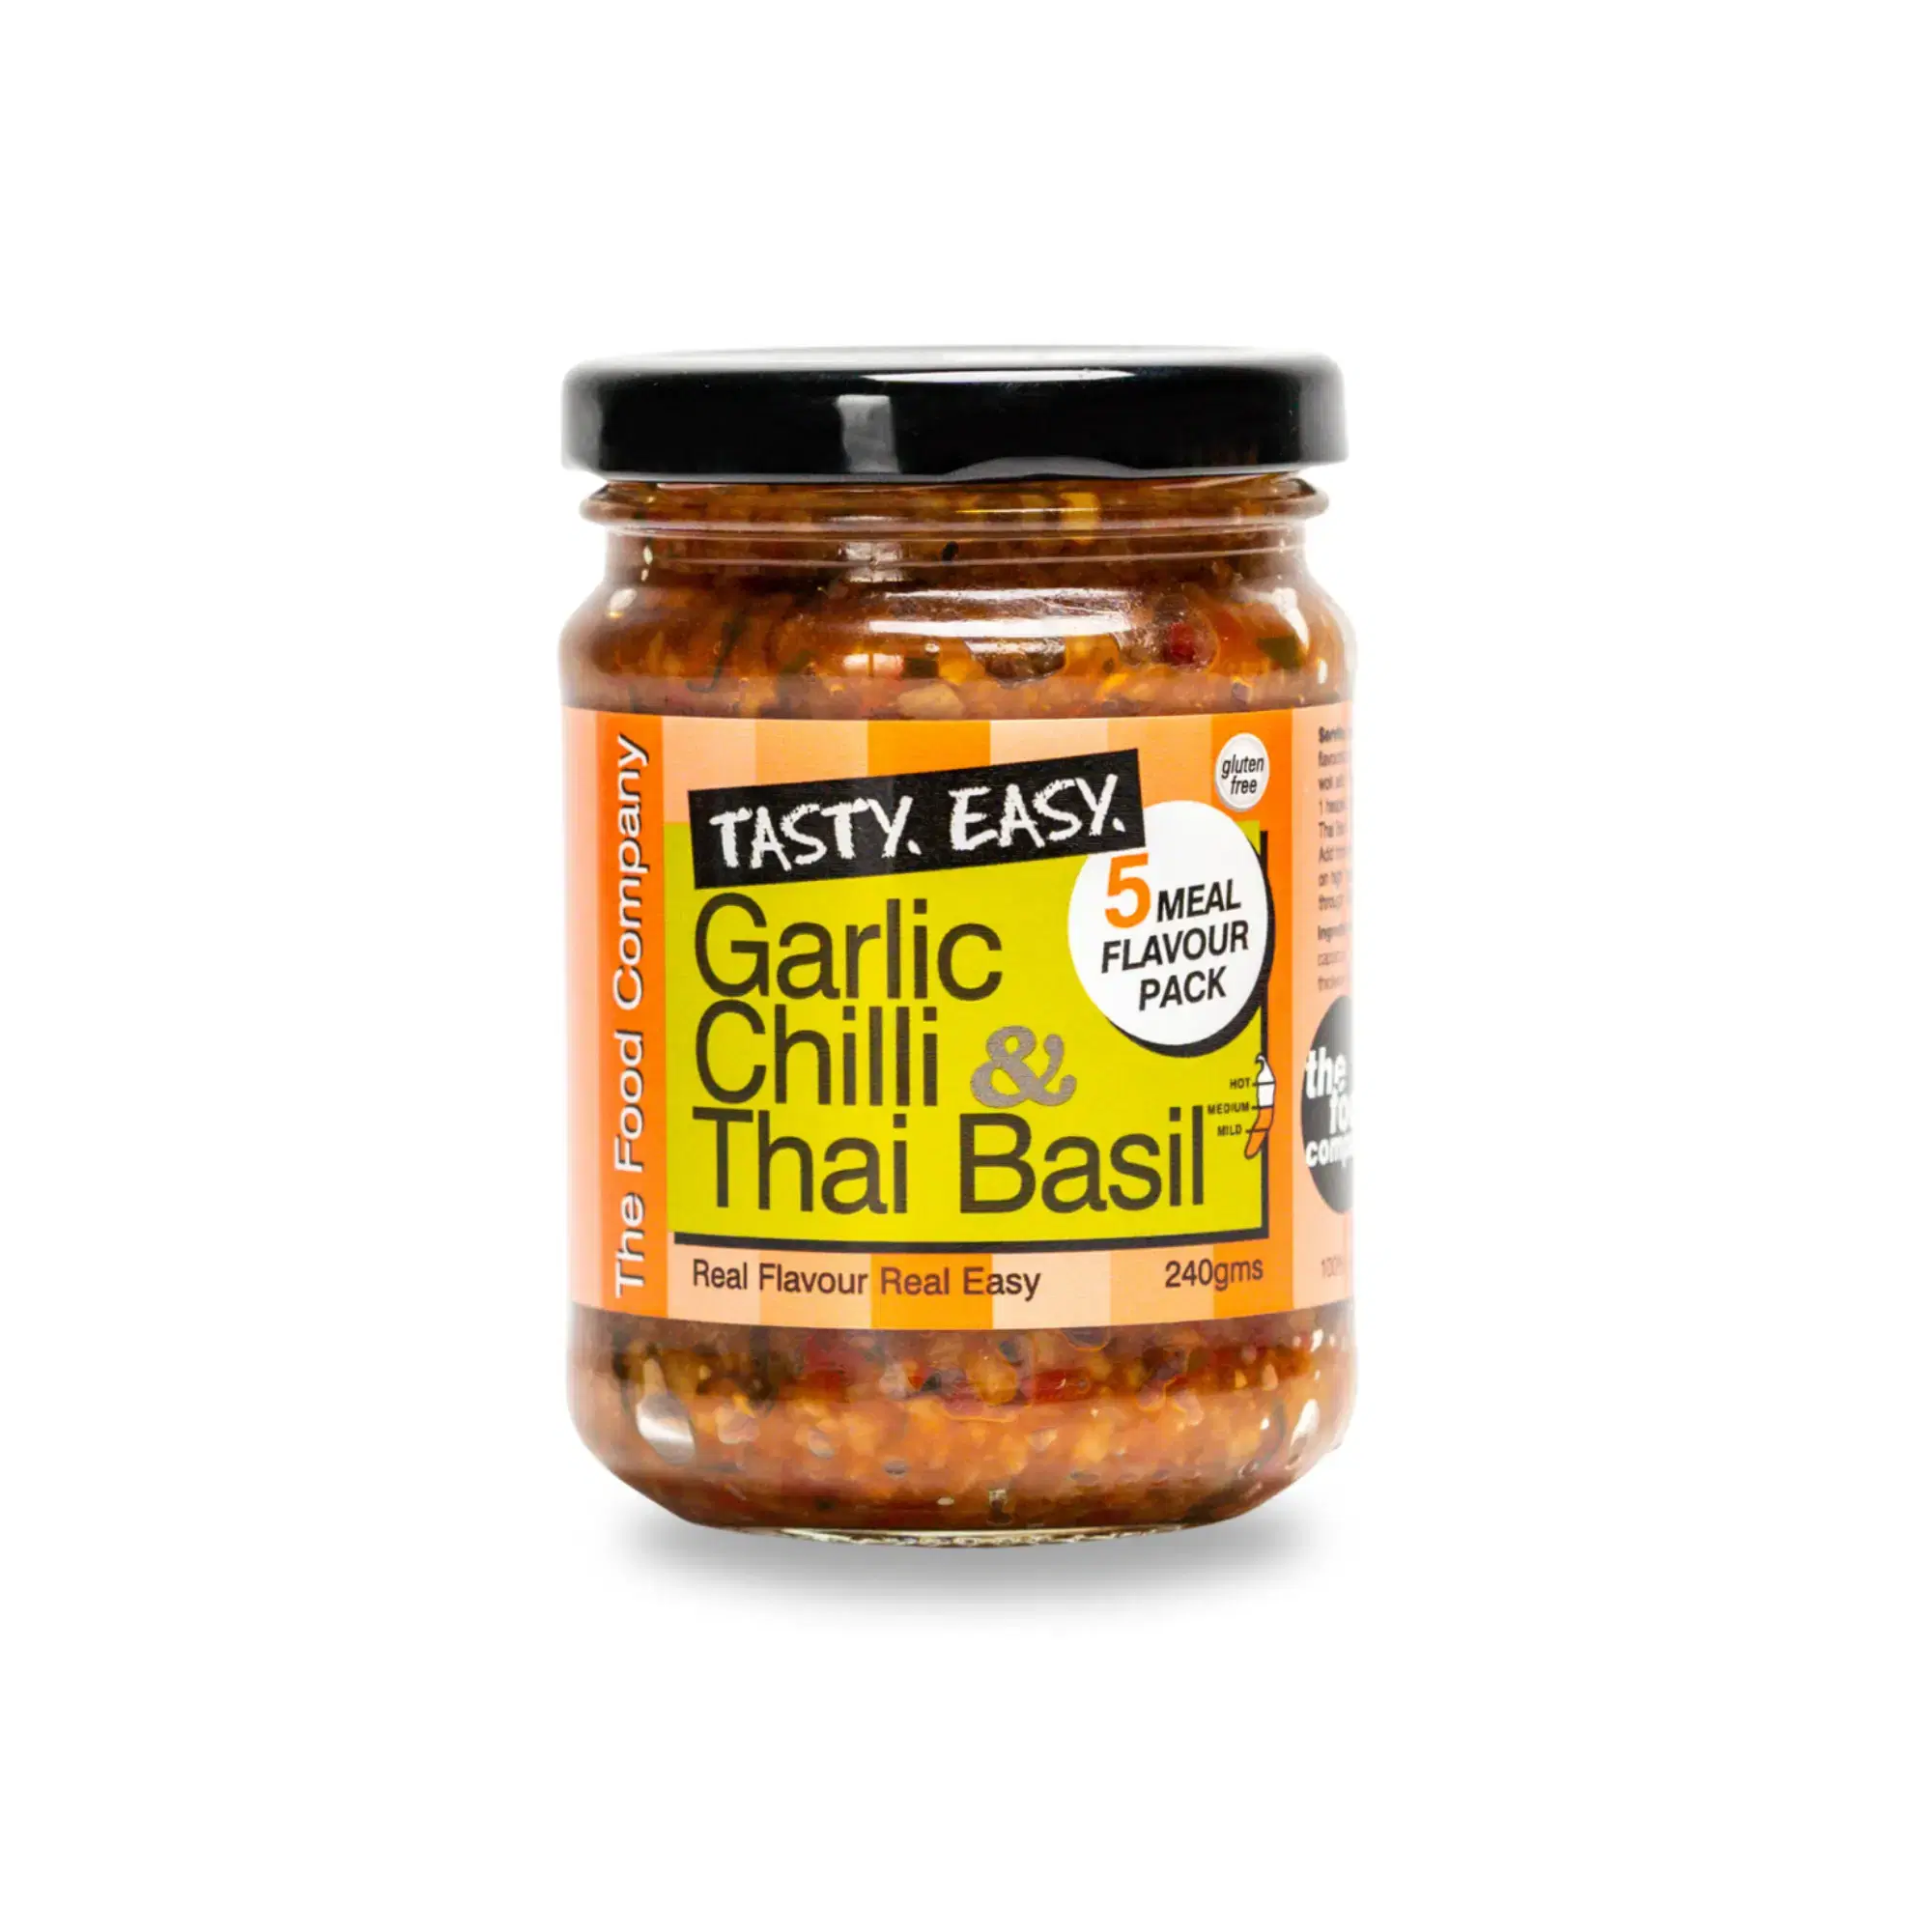 Garlic chilli product